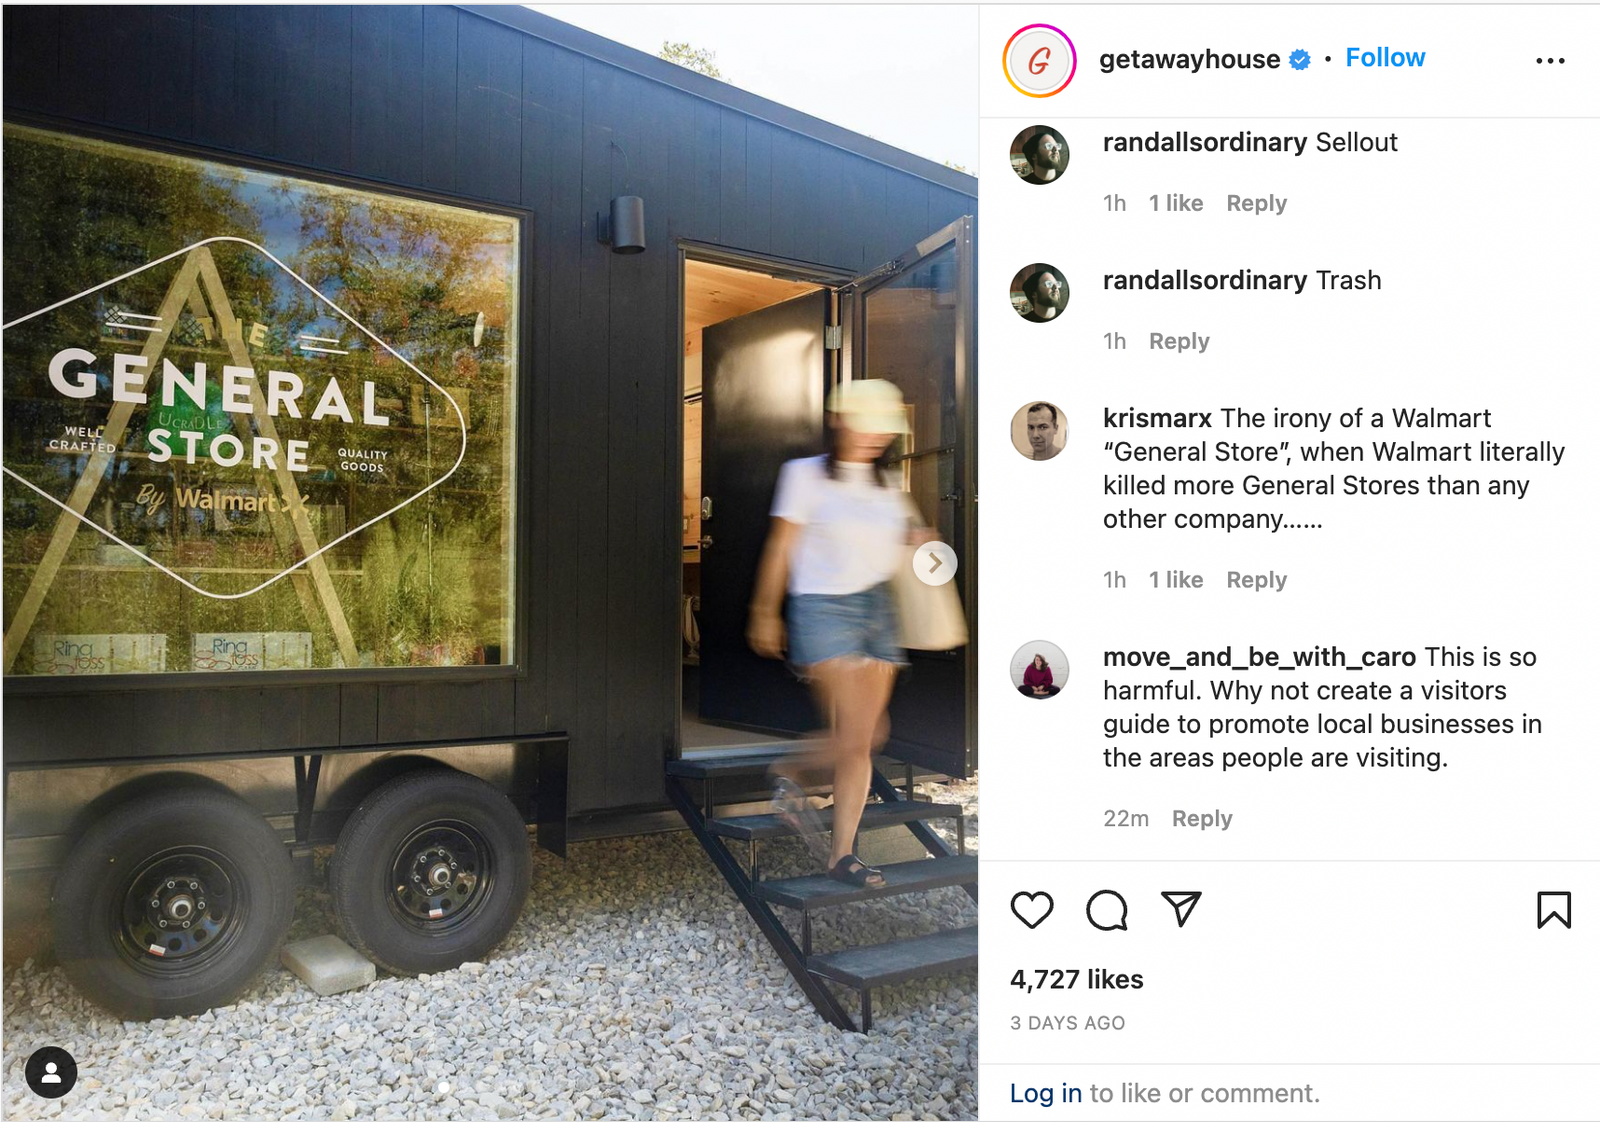 Getaway announced the Walmart partnership on Instagram.